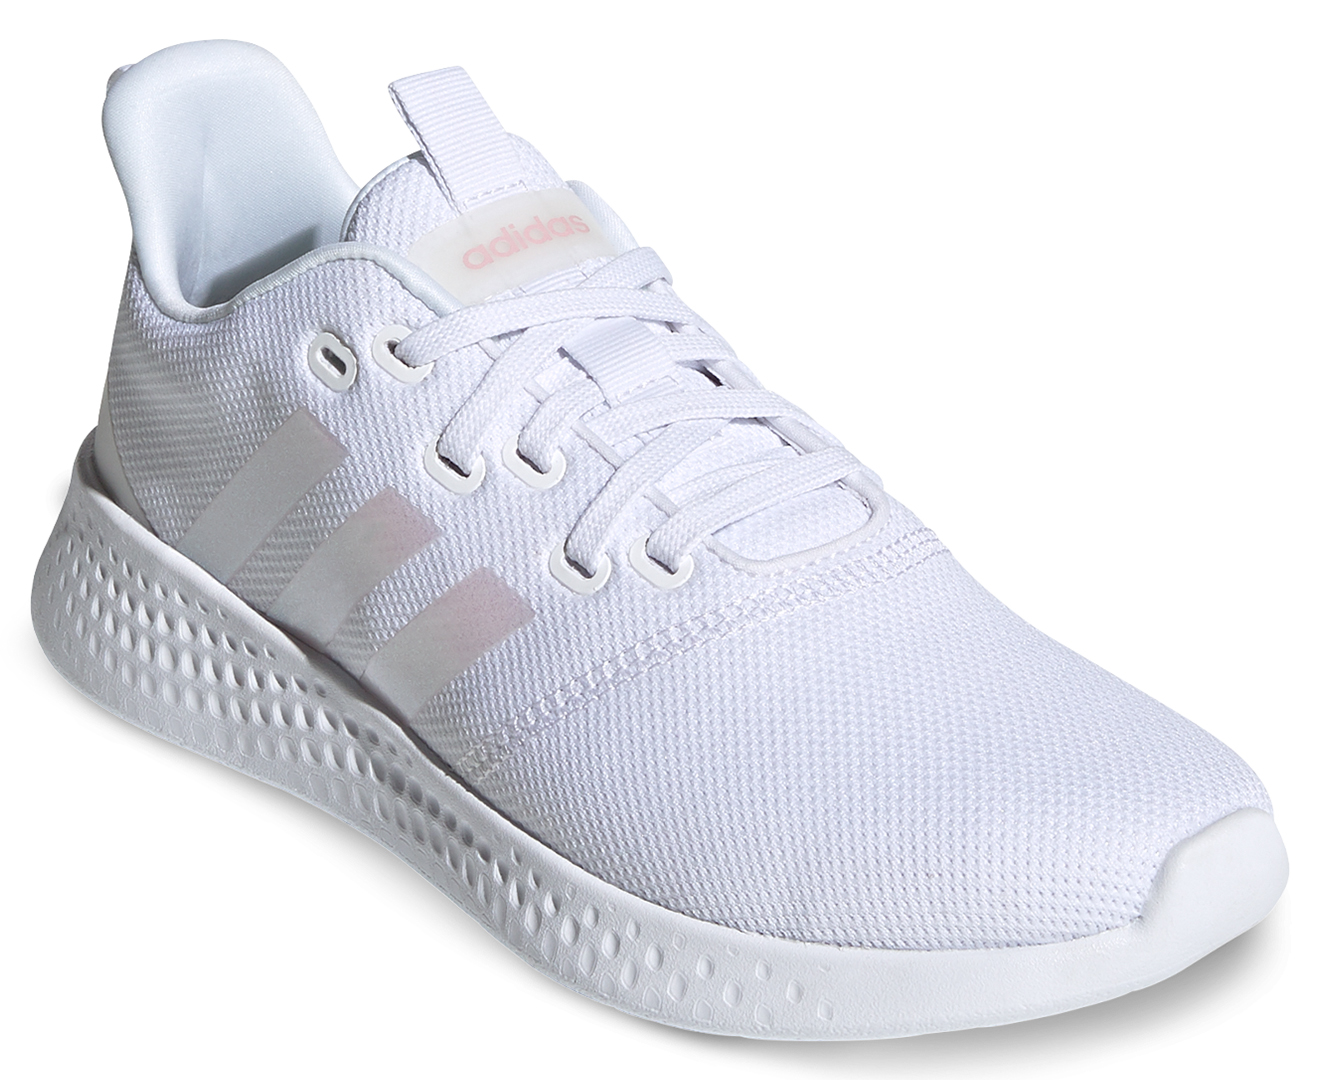 Adidas Women's Puremotion Shoes - White/Iridescent/Clear Pink | Catch.com.au